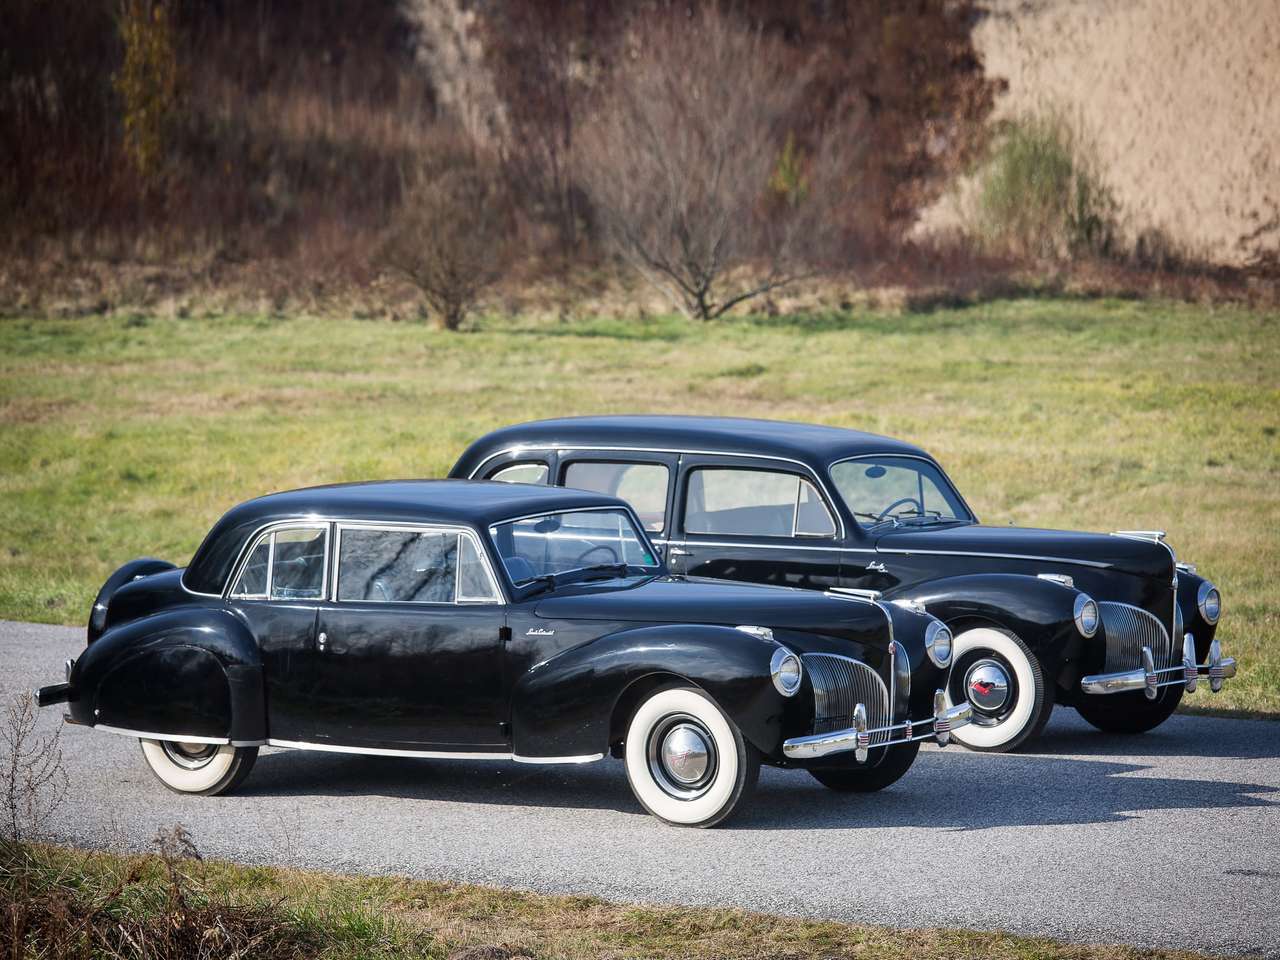 1941 Lincoln Continental Coupe & Lincoln Custom Li online puzzle